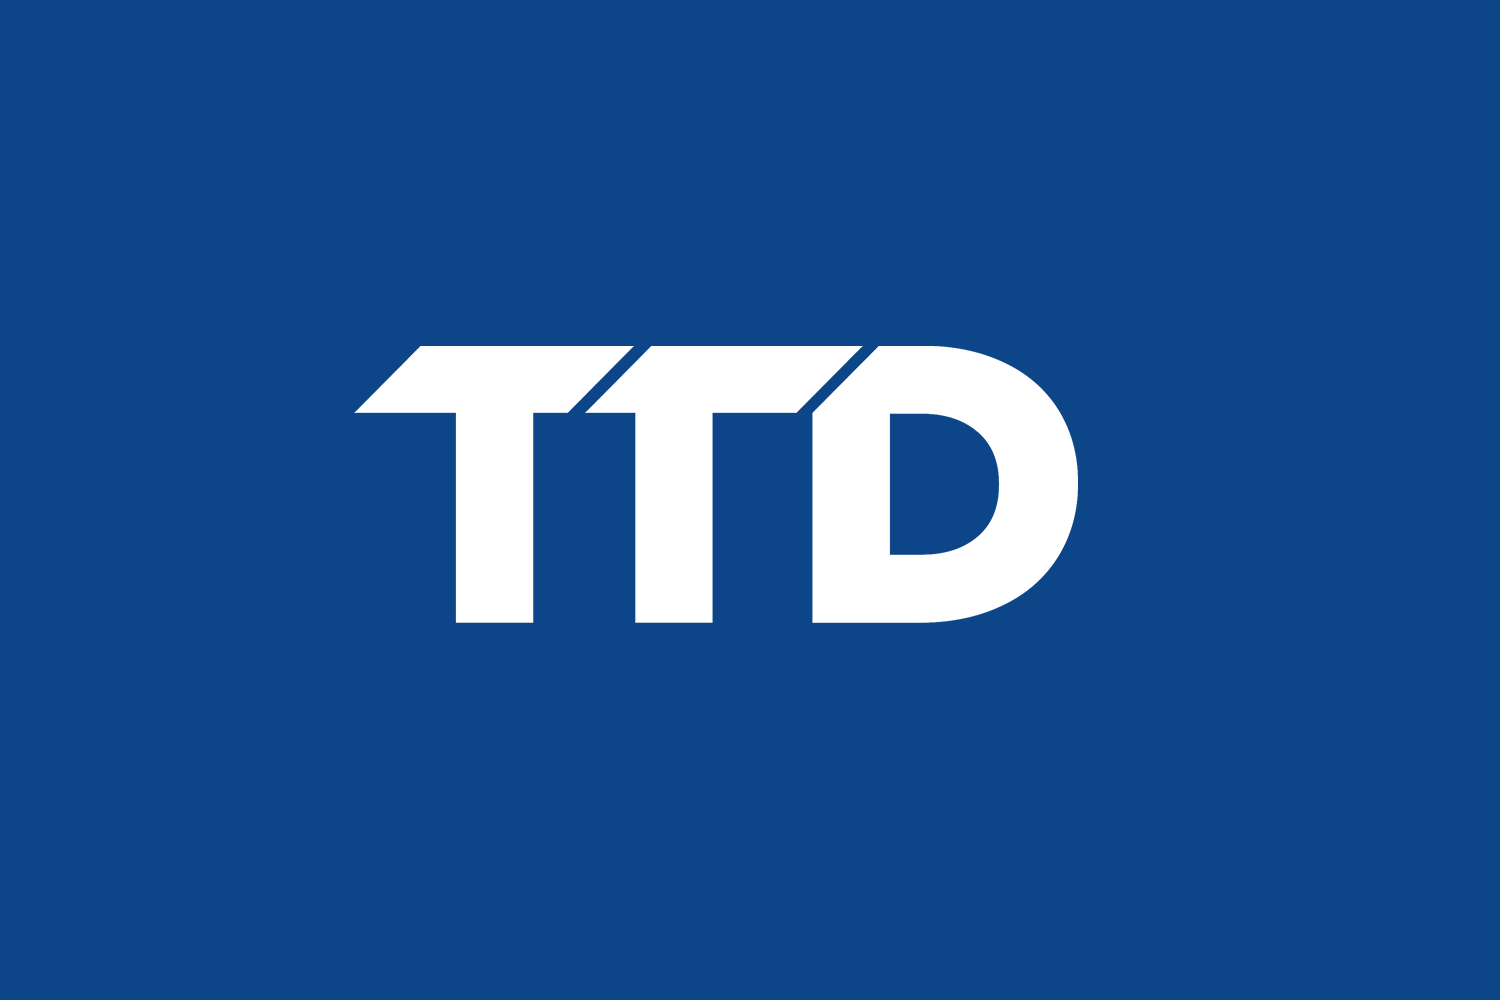 (c) Ttd.org